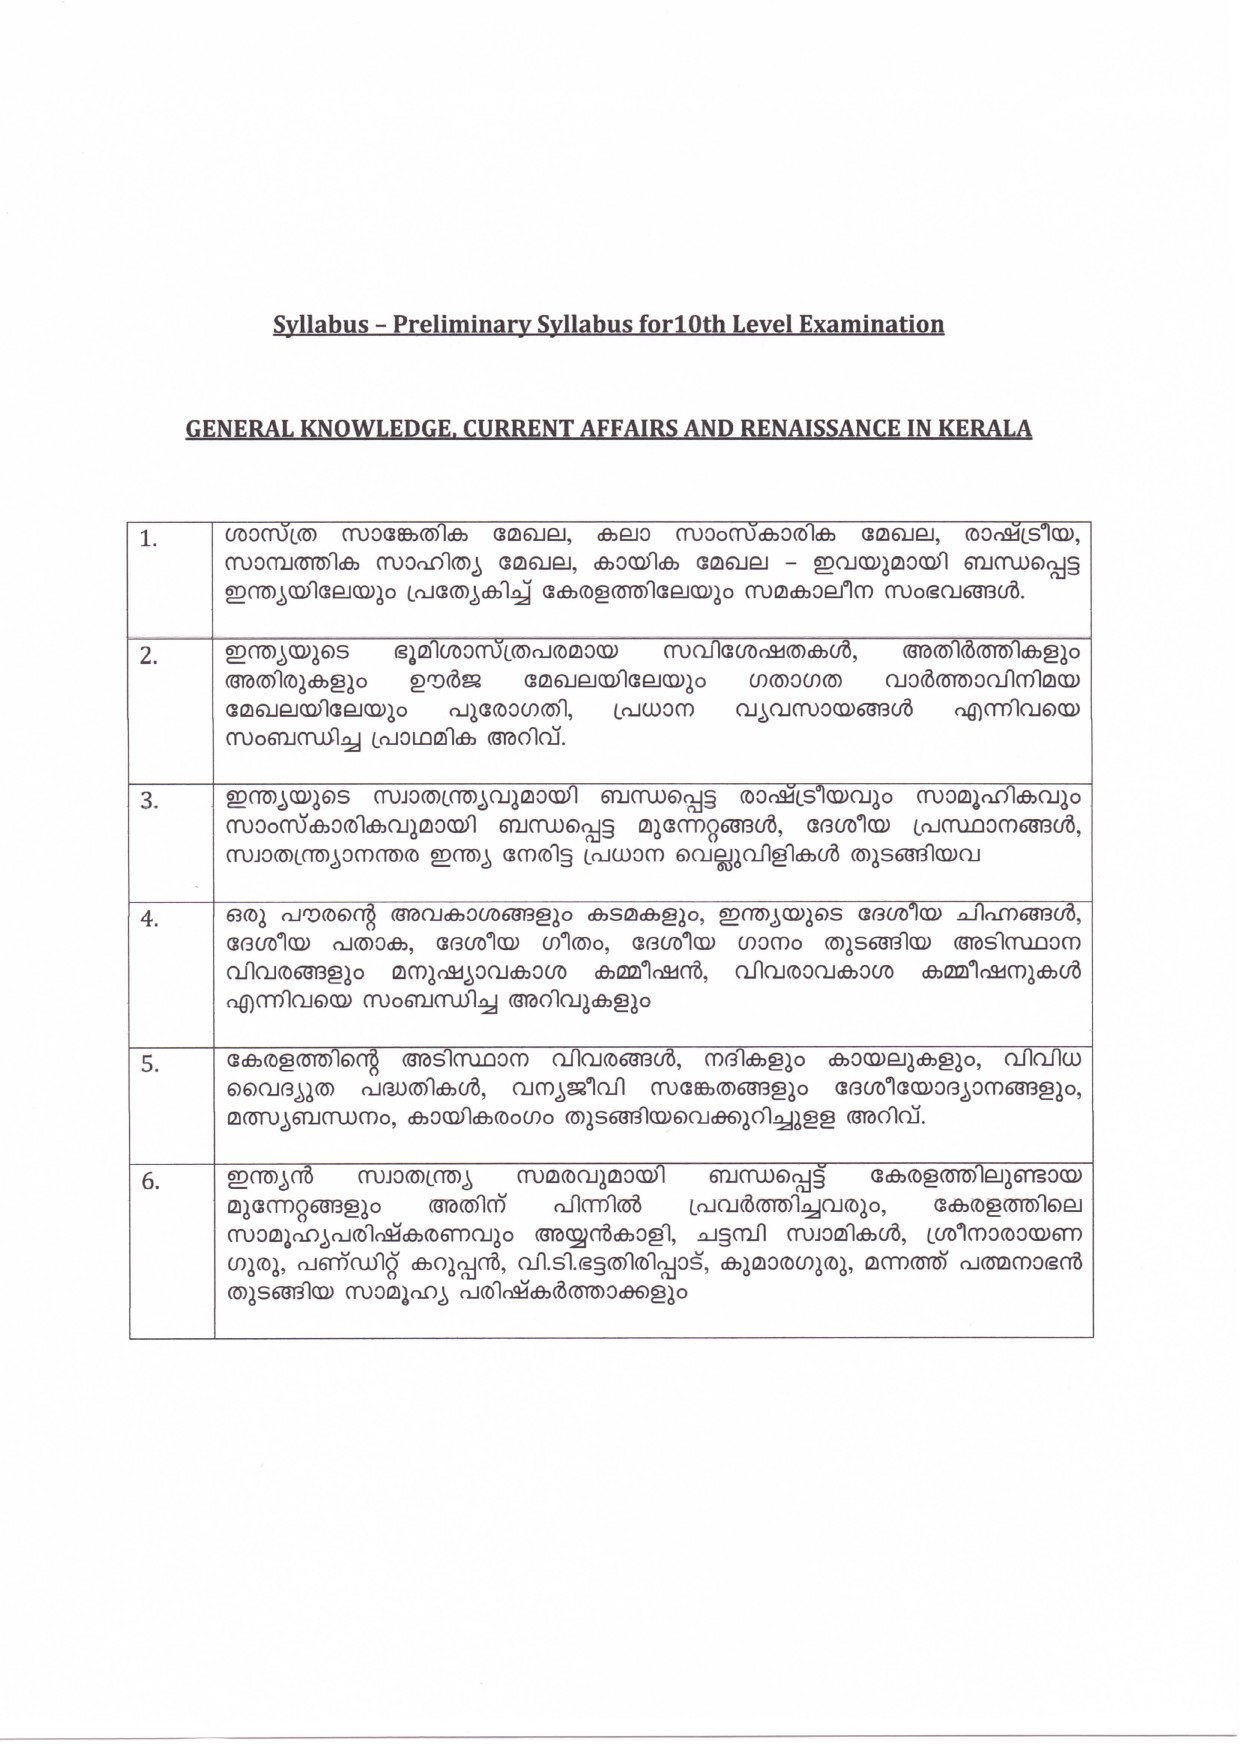 KPSC Preliminary Syllabus For 10th Level Examination - Notification Image 1